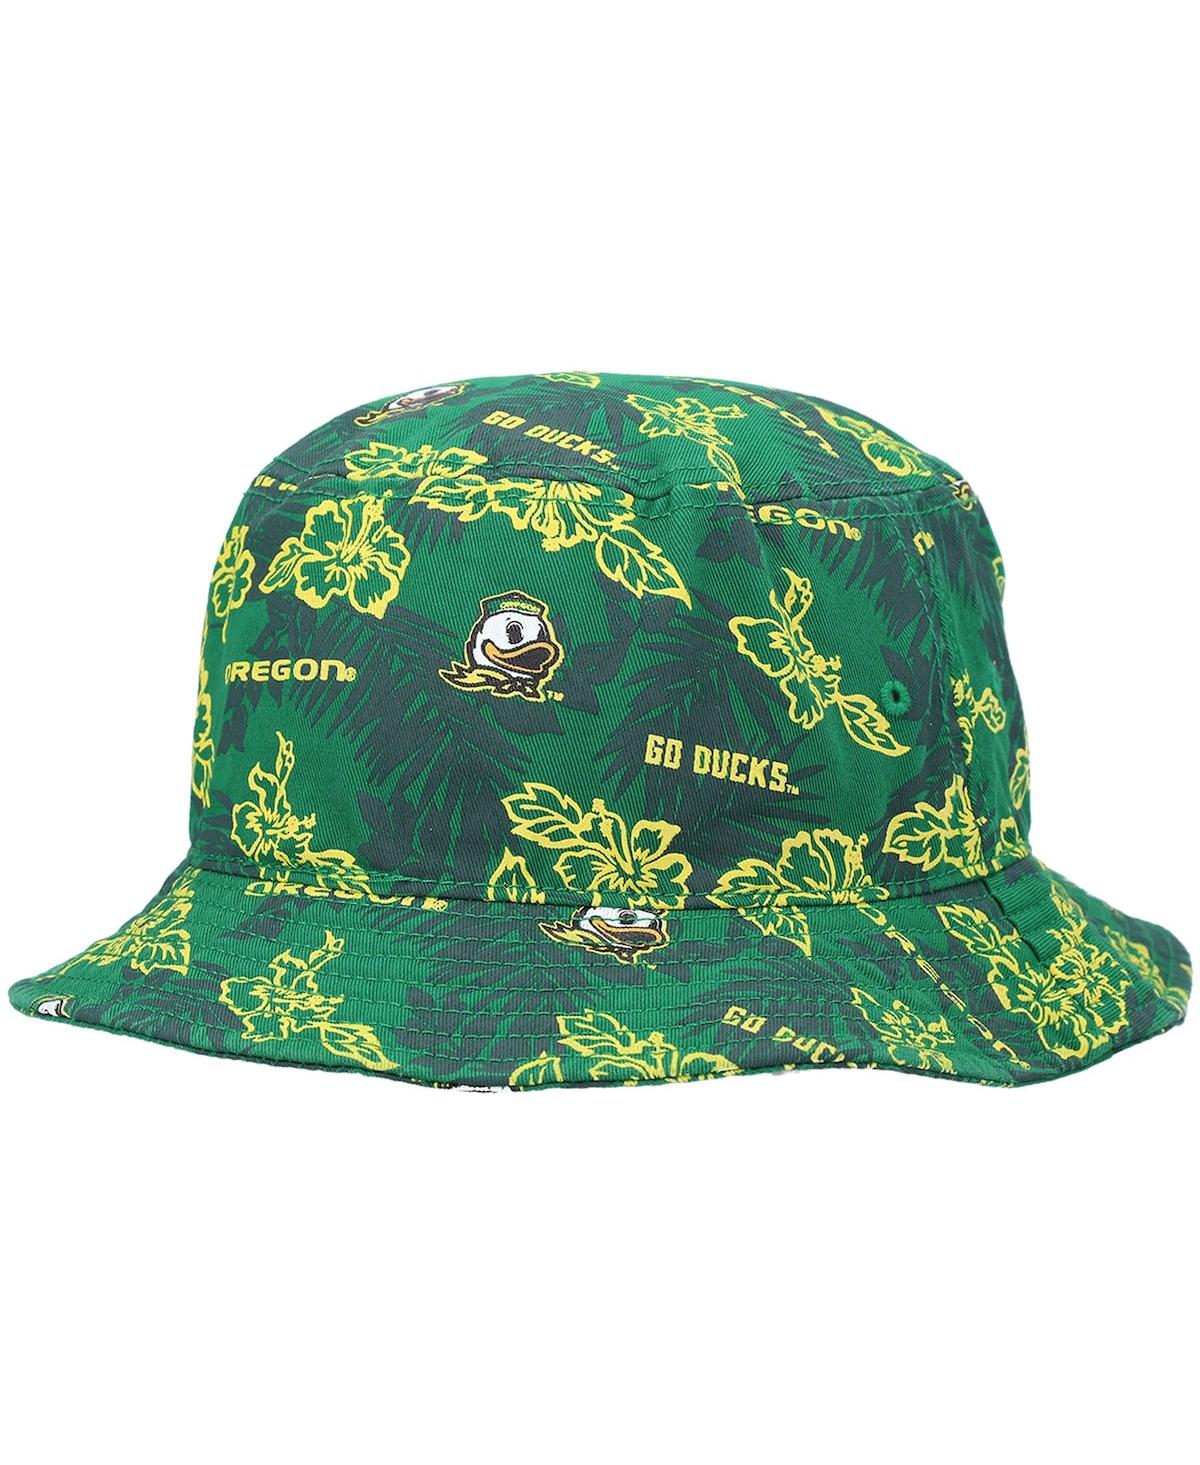 REYN SPOONER MEN'S REYN SPOONER GREEN OREGON DUCKS FLORAL BUCKET HAT